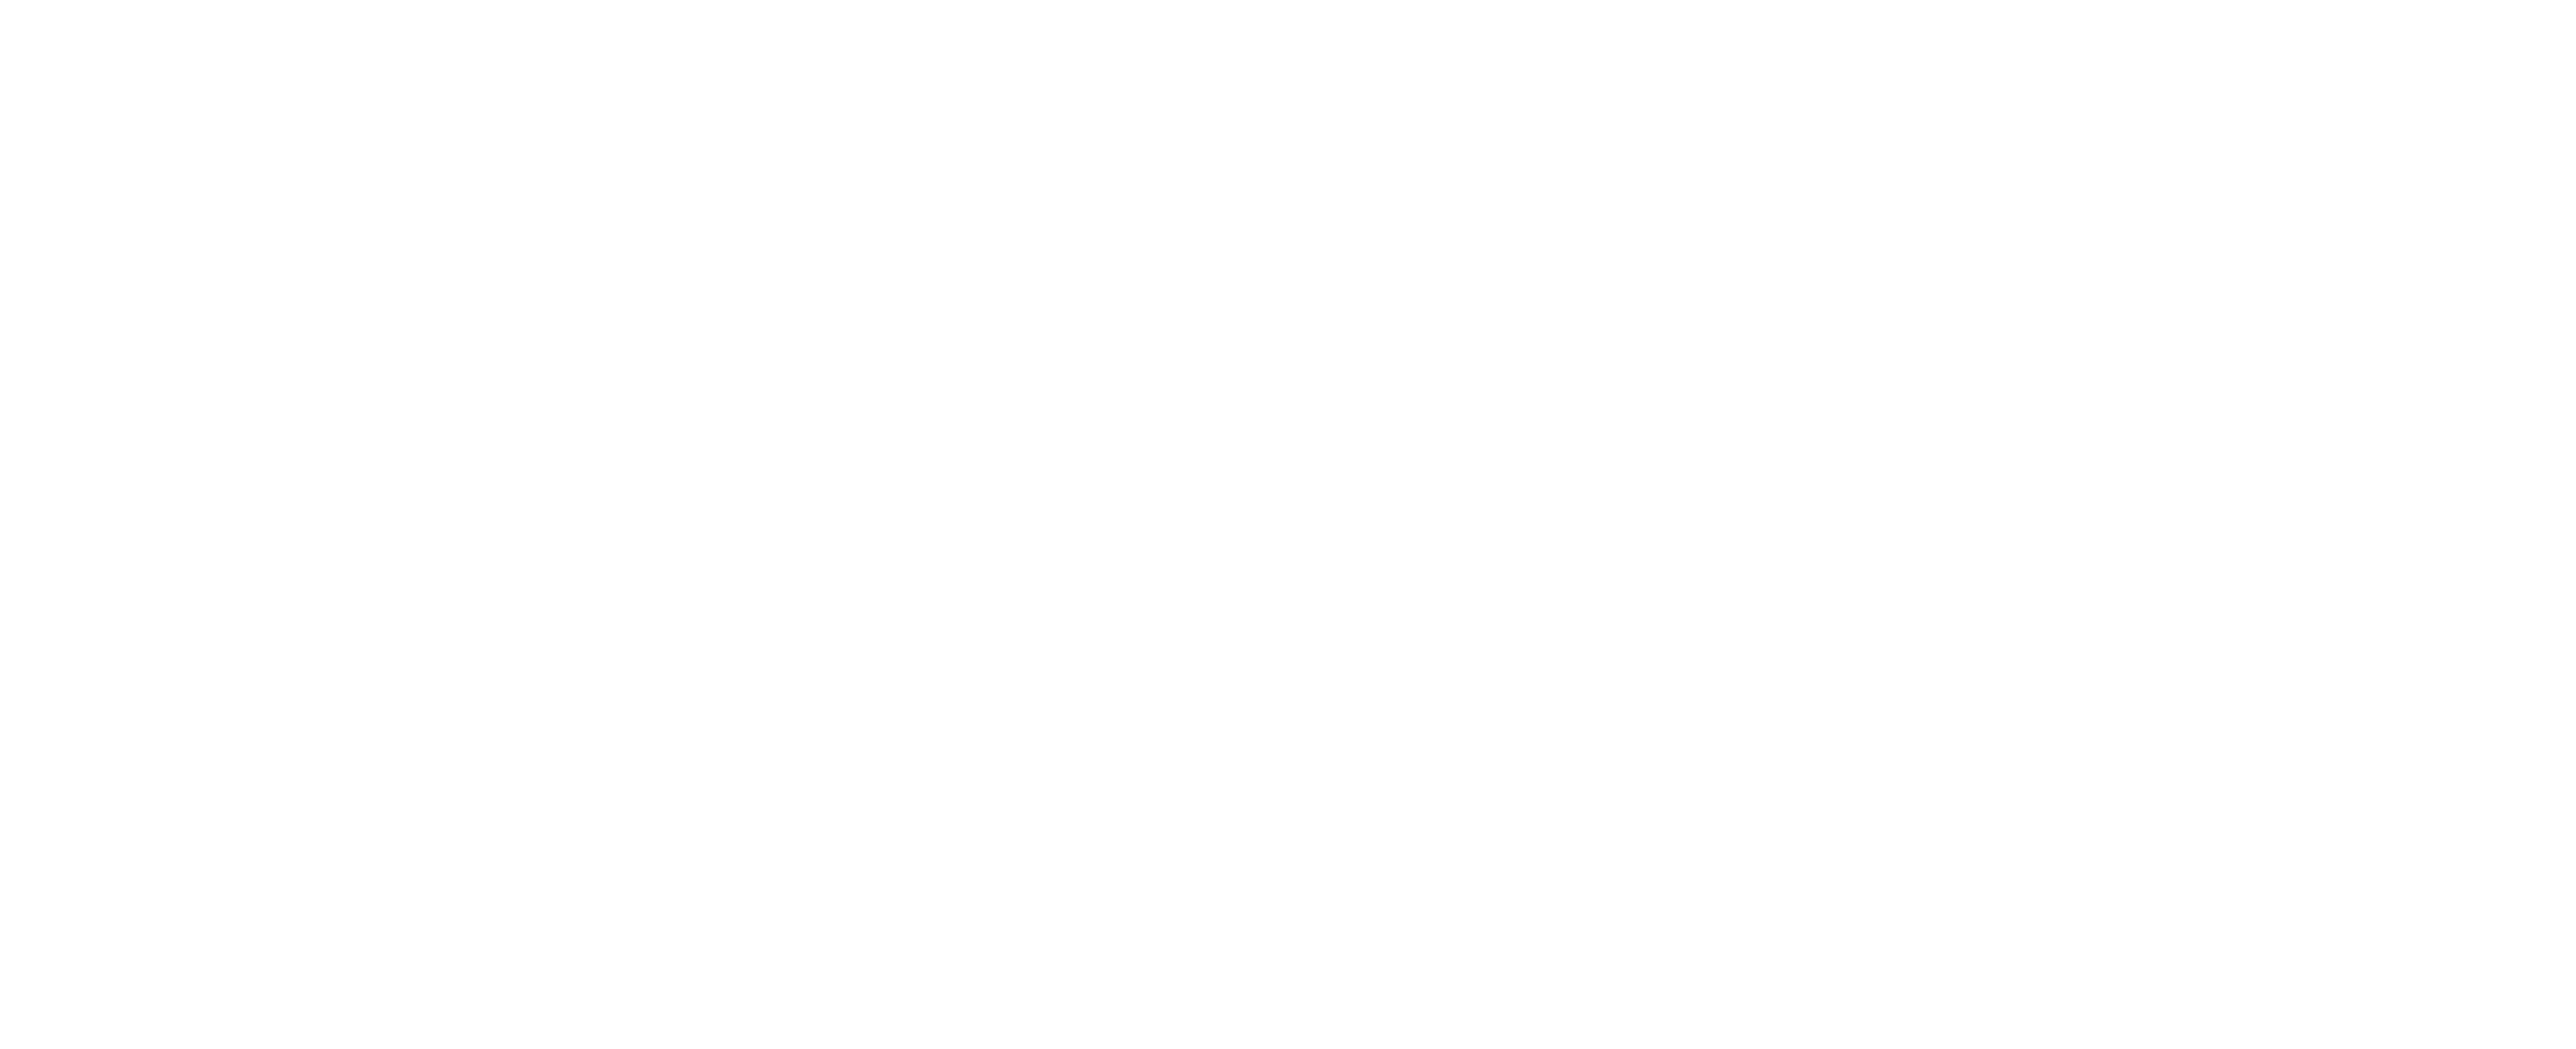 redwoord trust white logo